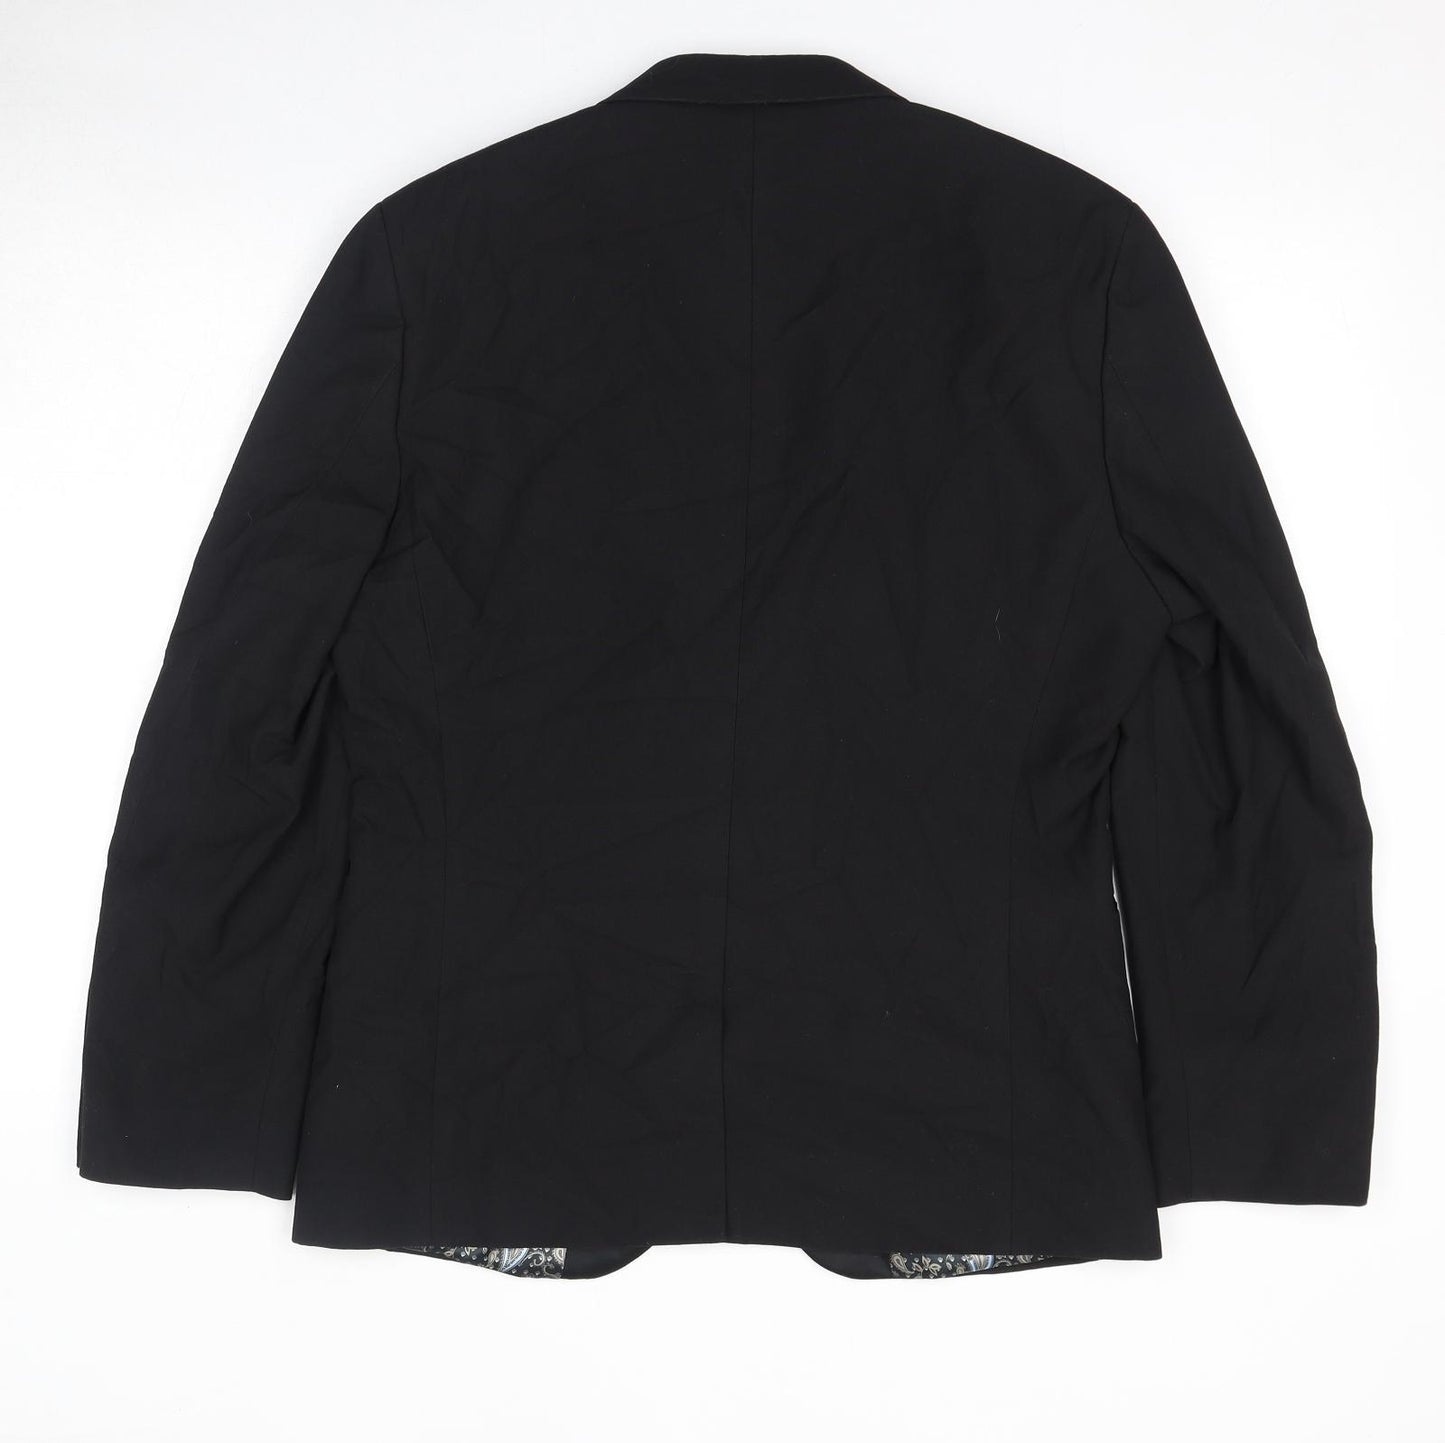 NEXT Mens Black Polyester Tuxedo Suit Jacket Size 40 Regular